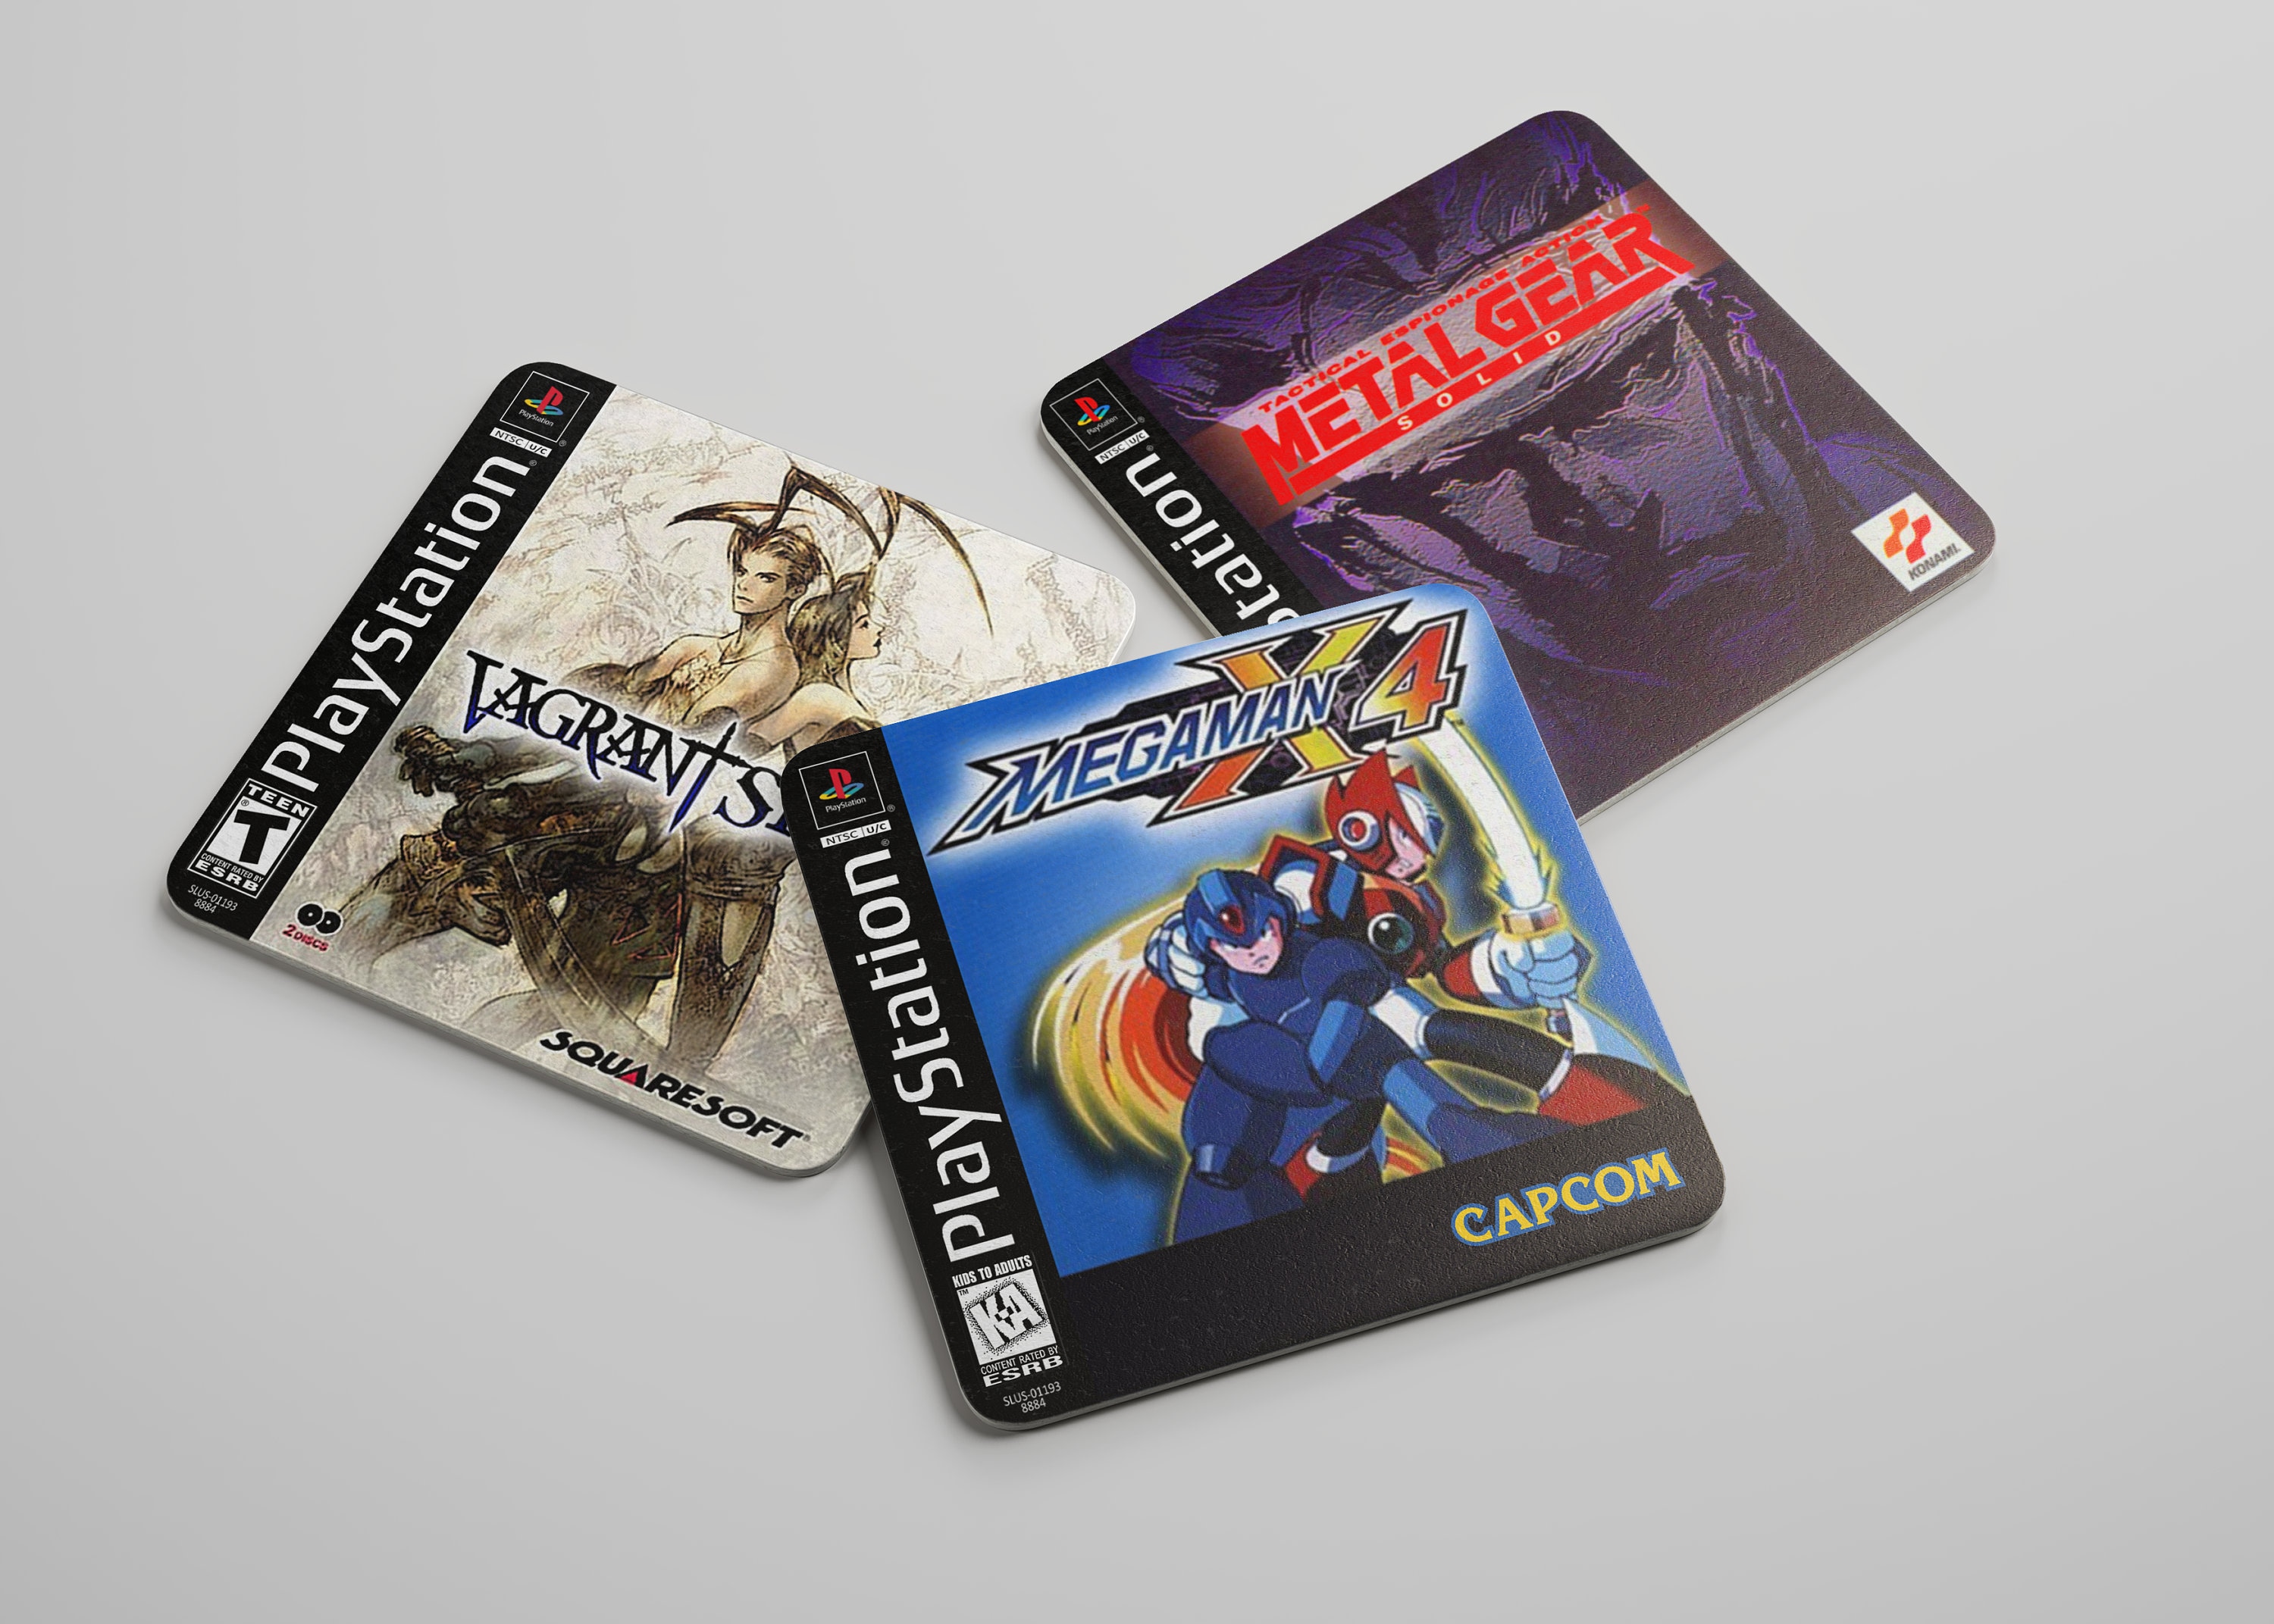 Arcade Videogame Drink Coasters Marvel Vs. Capcom Arcade Set 